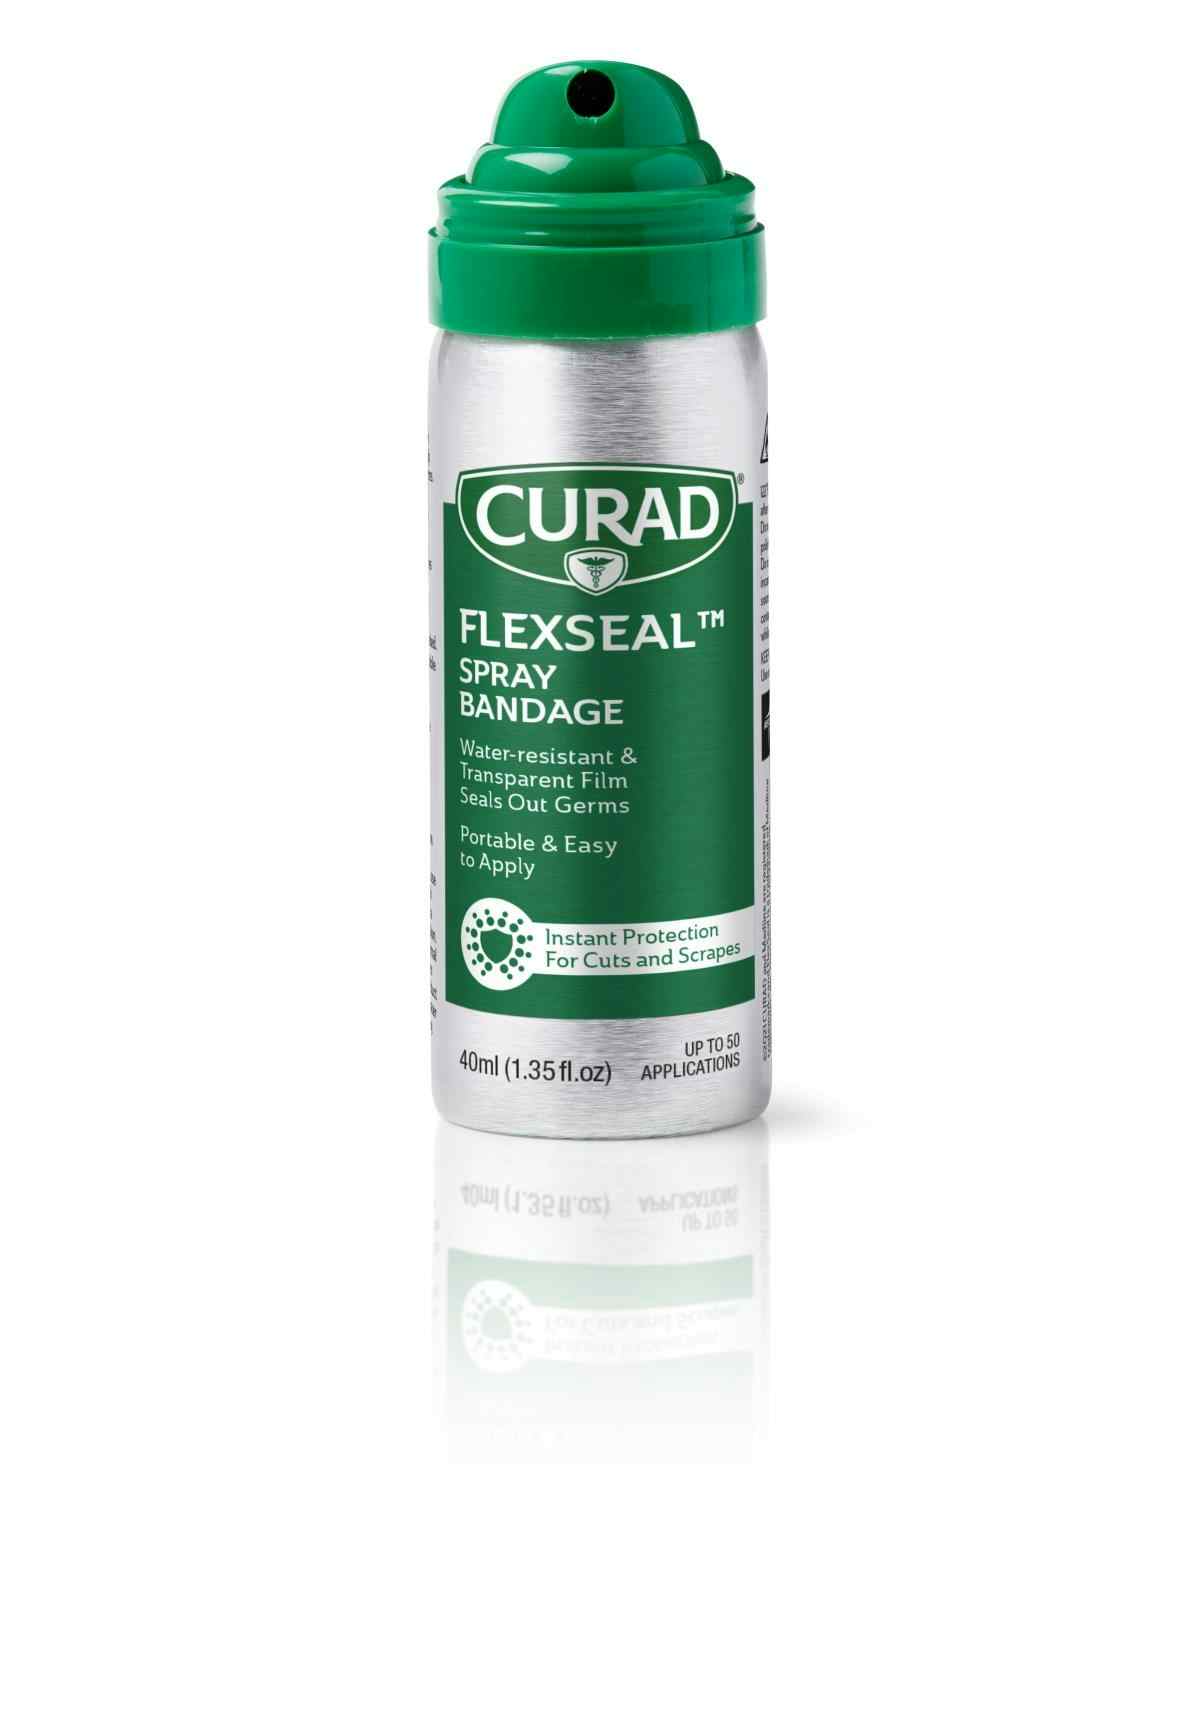 Curad Flex Seal Spray Bandage, CUR76124RB, Case of 24